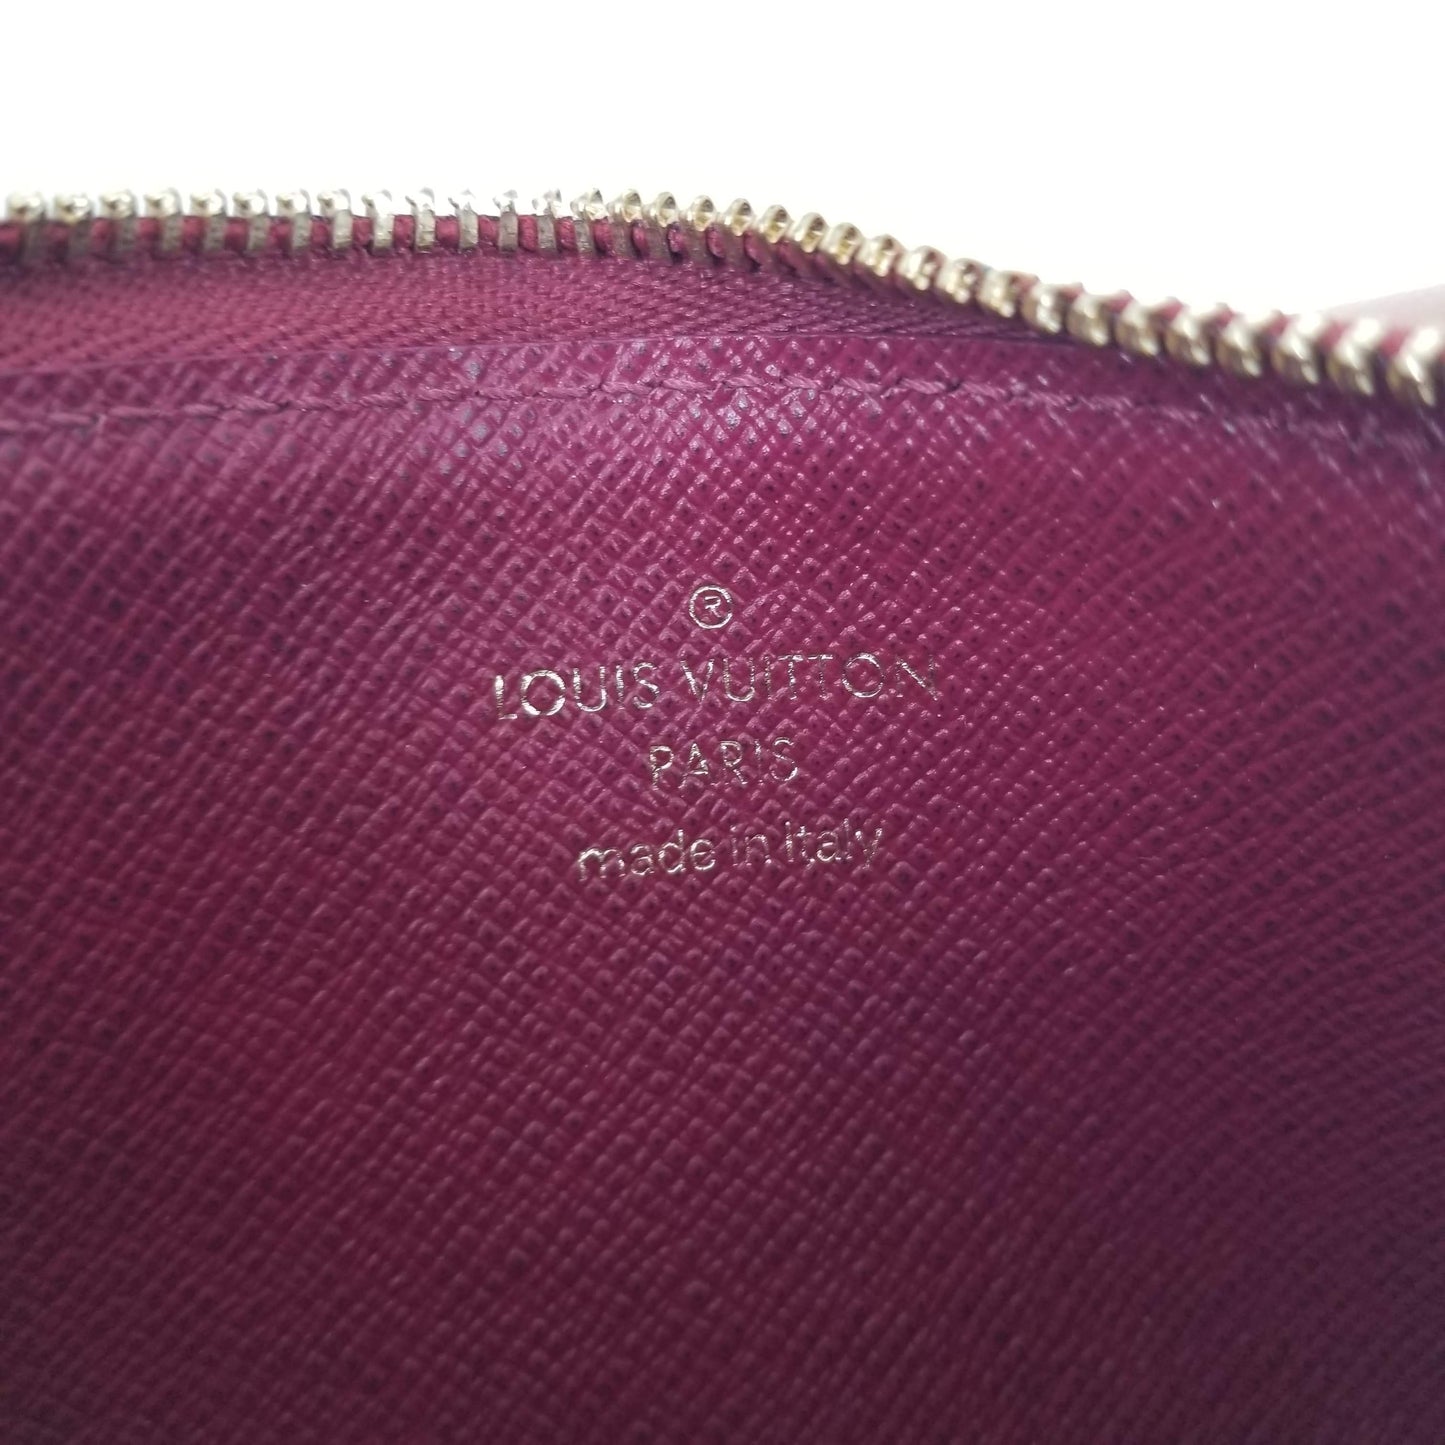 Authentic Louis Vuitton Fuchsia Zipped Card Holder